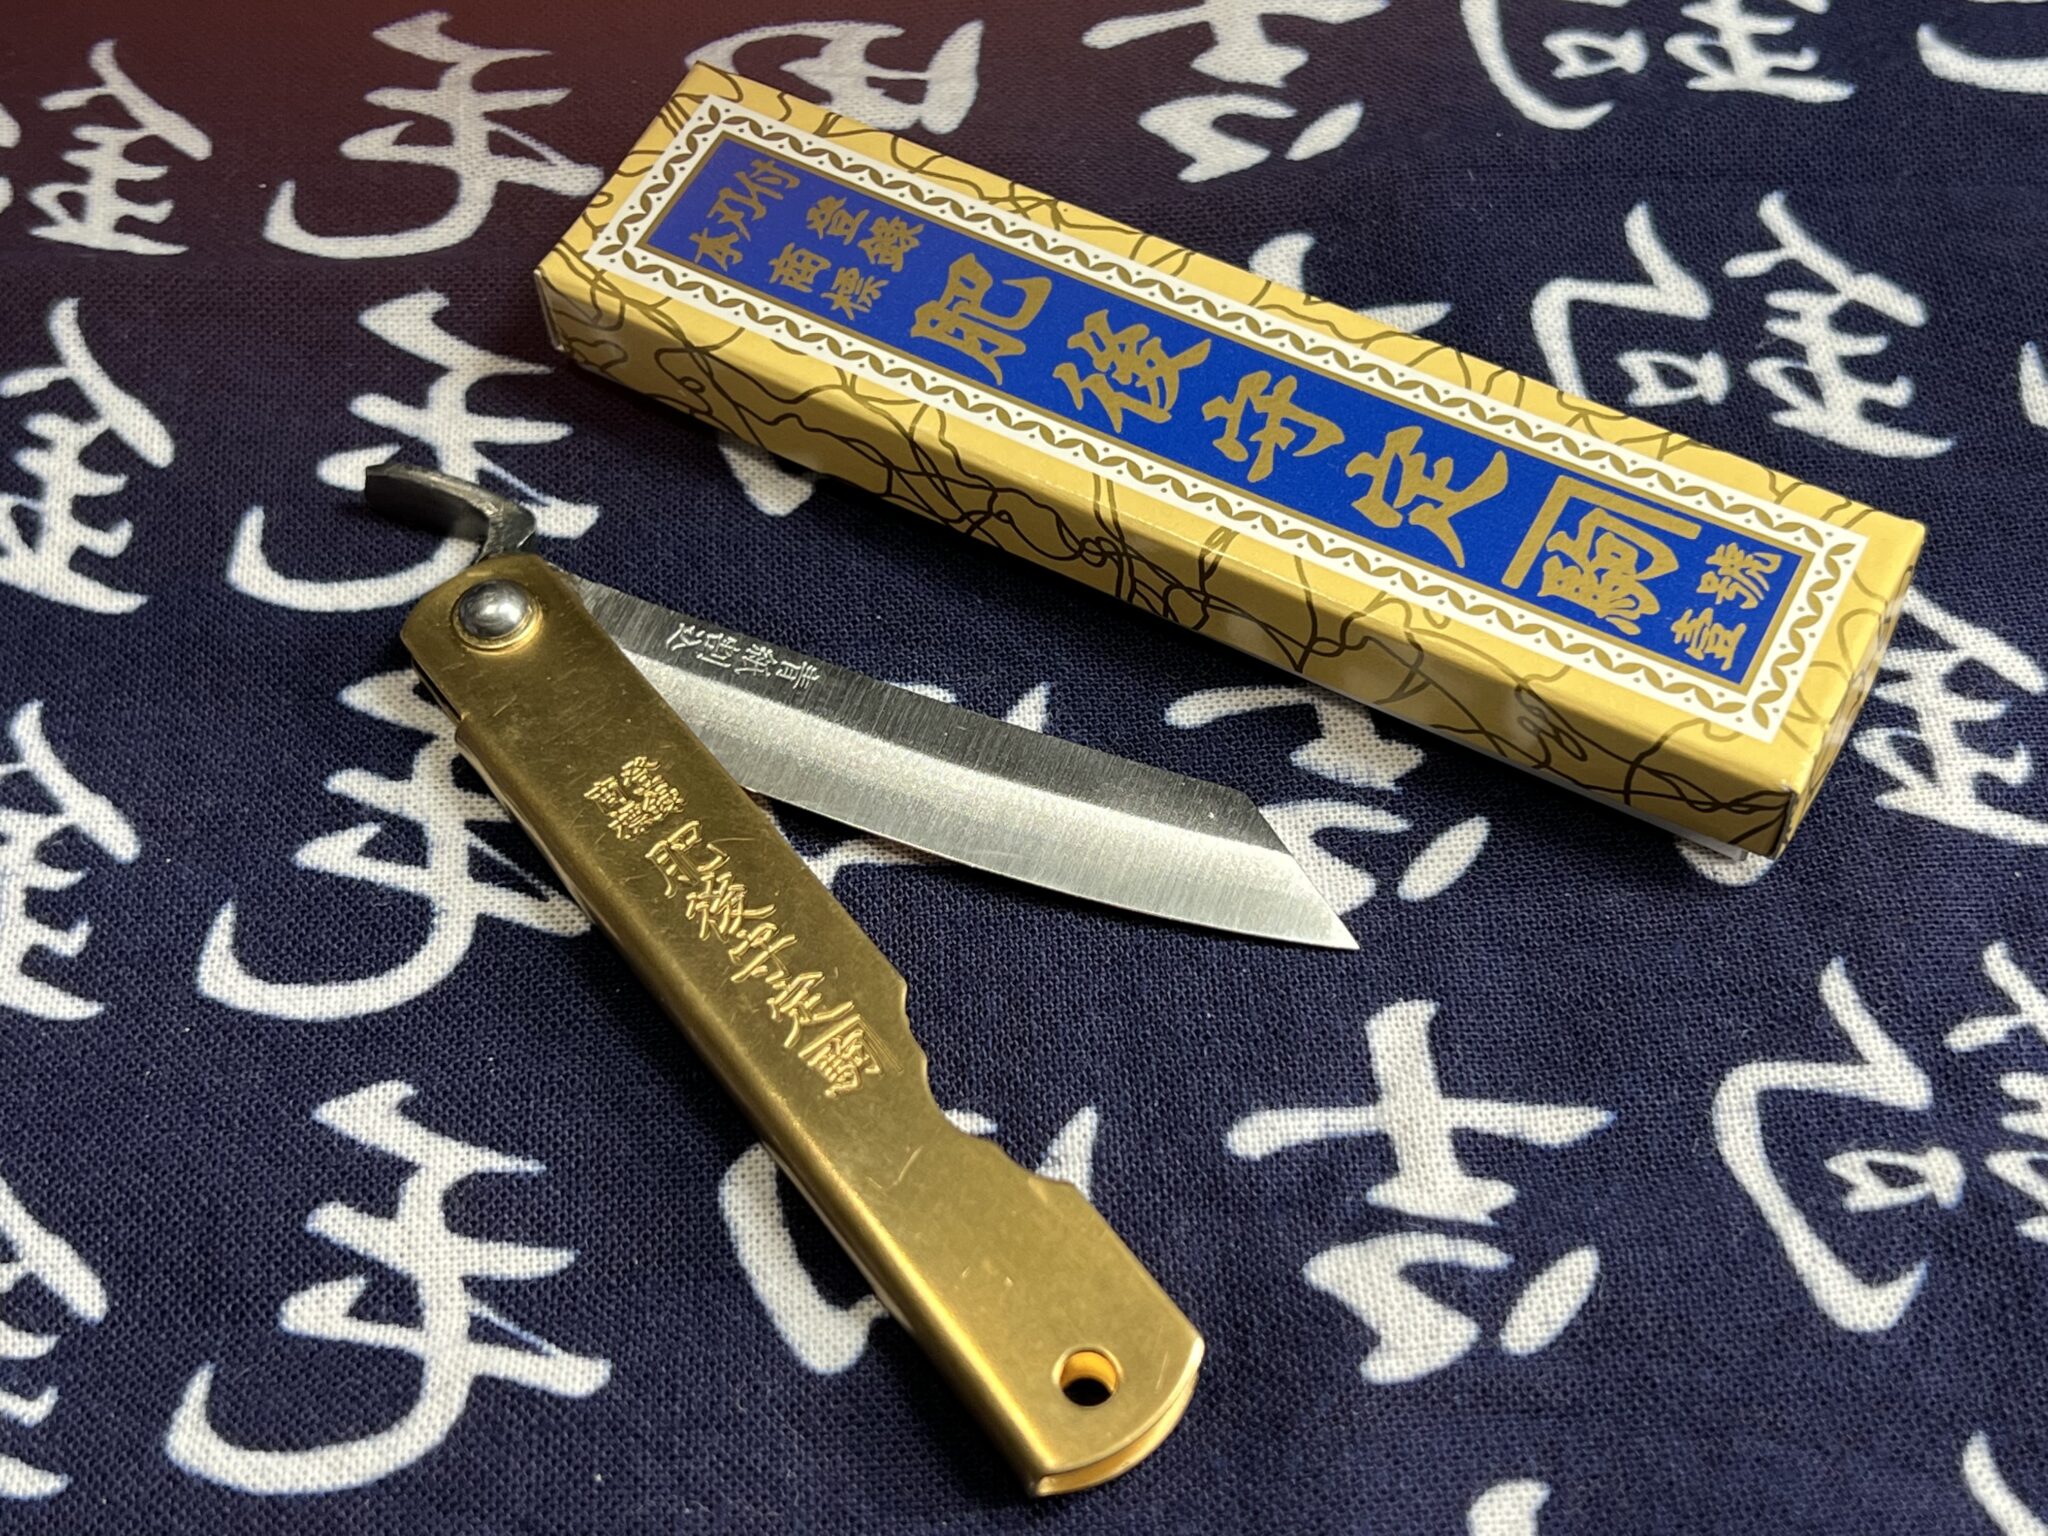 The Higonokami: A Good Knife for the Tenkara Lifestyle